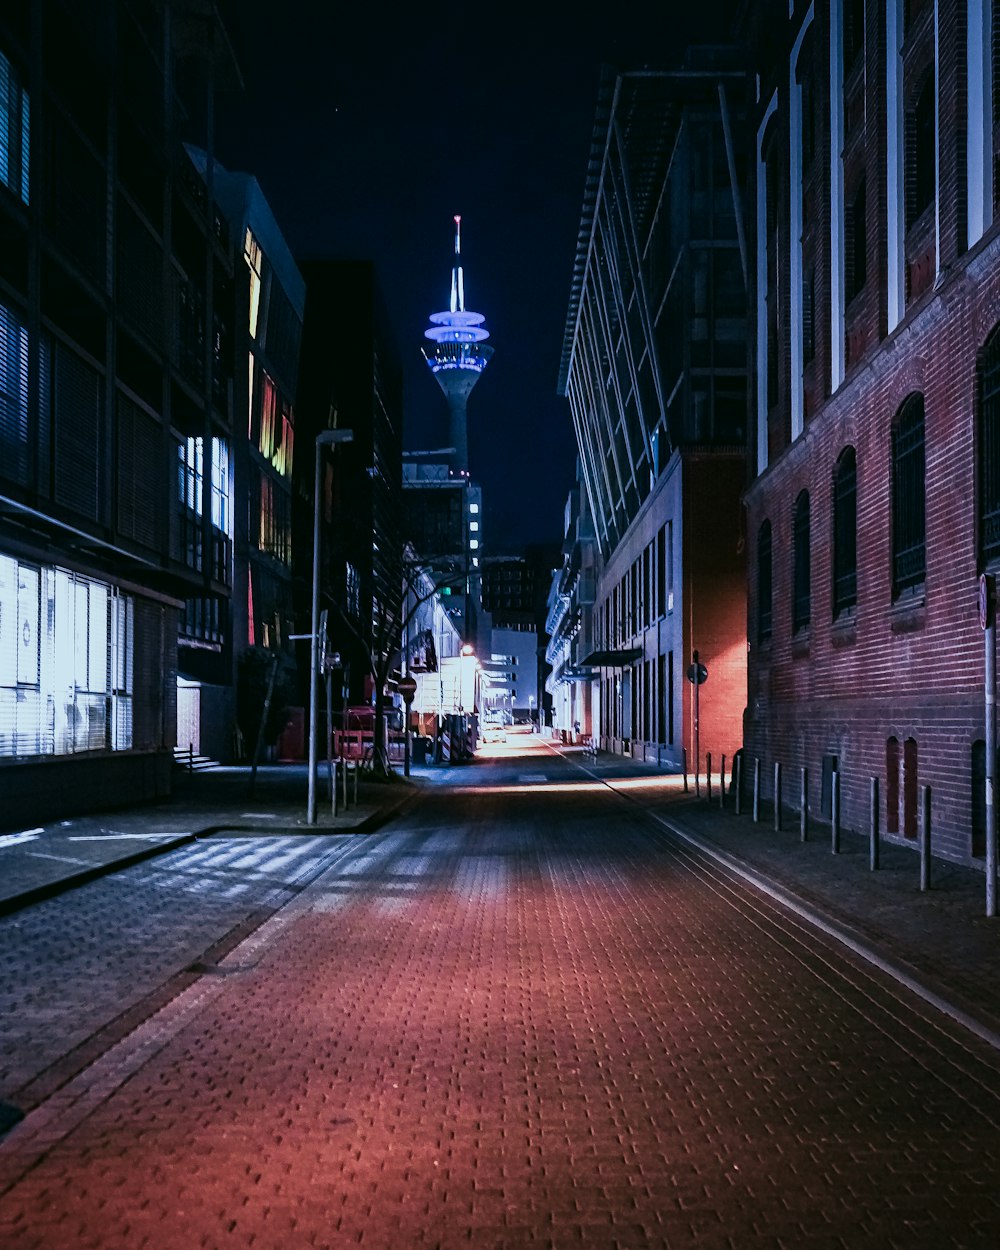 red brick road between buildings during night time